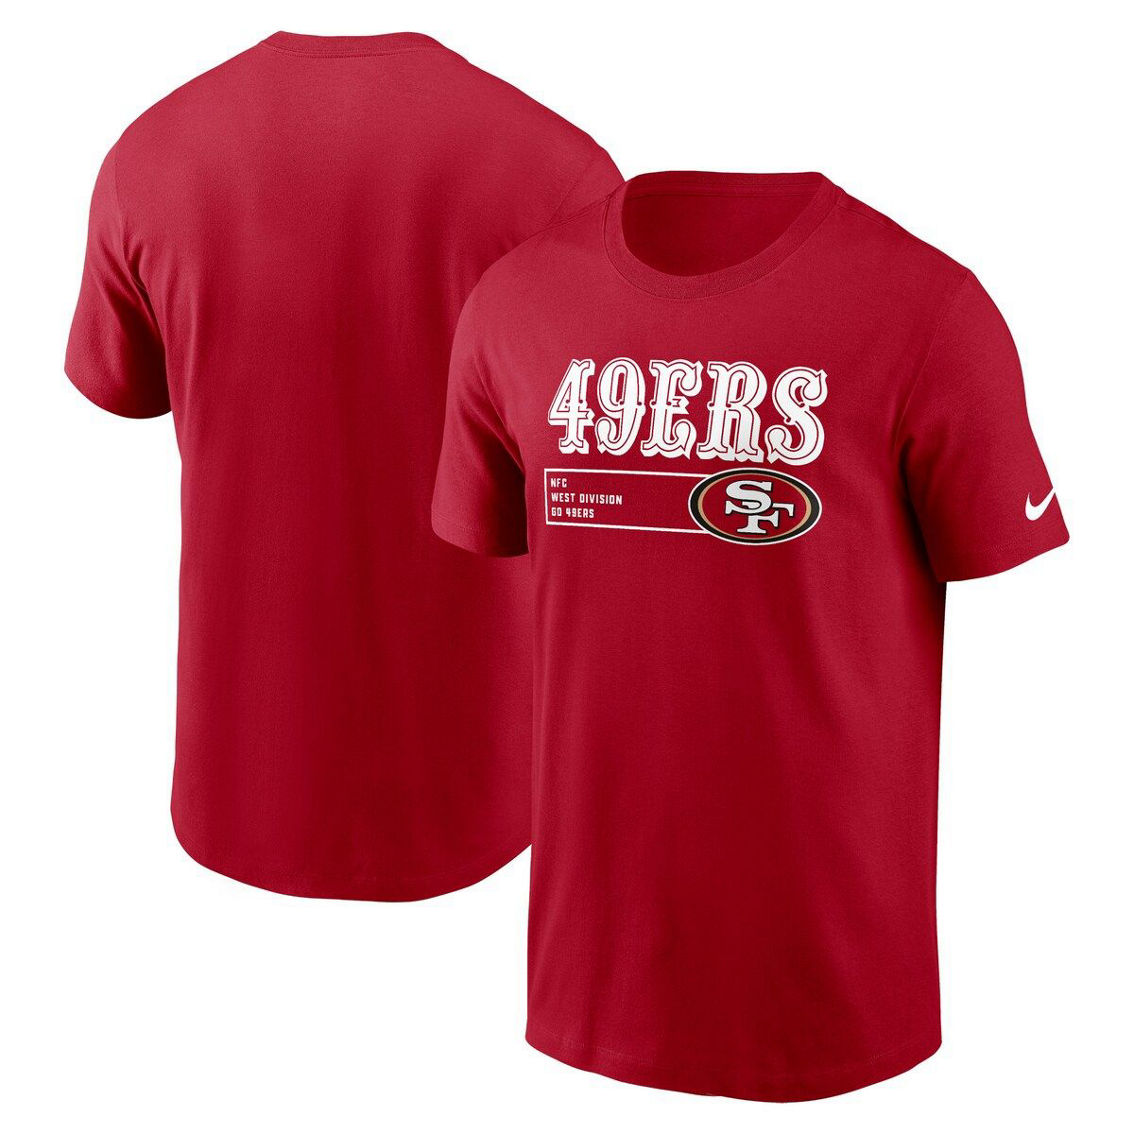 Nike Men's Scarlet San Francisco 49ers Division Essential T-Shirt - Image 2 of 4